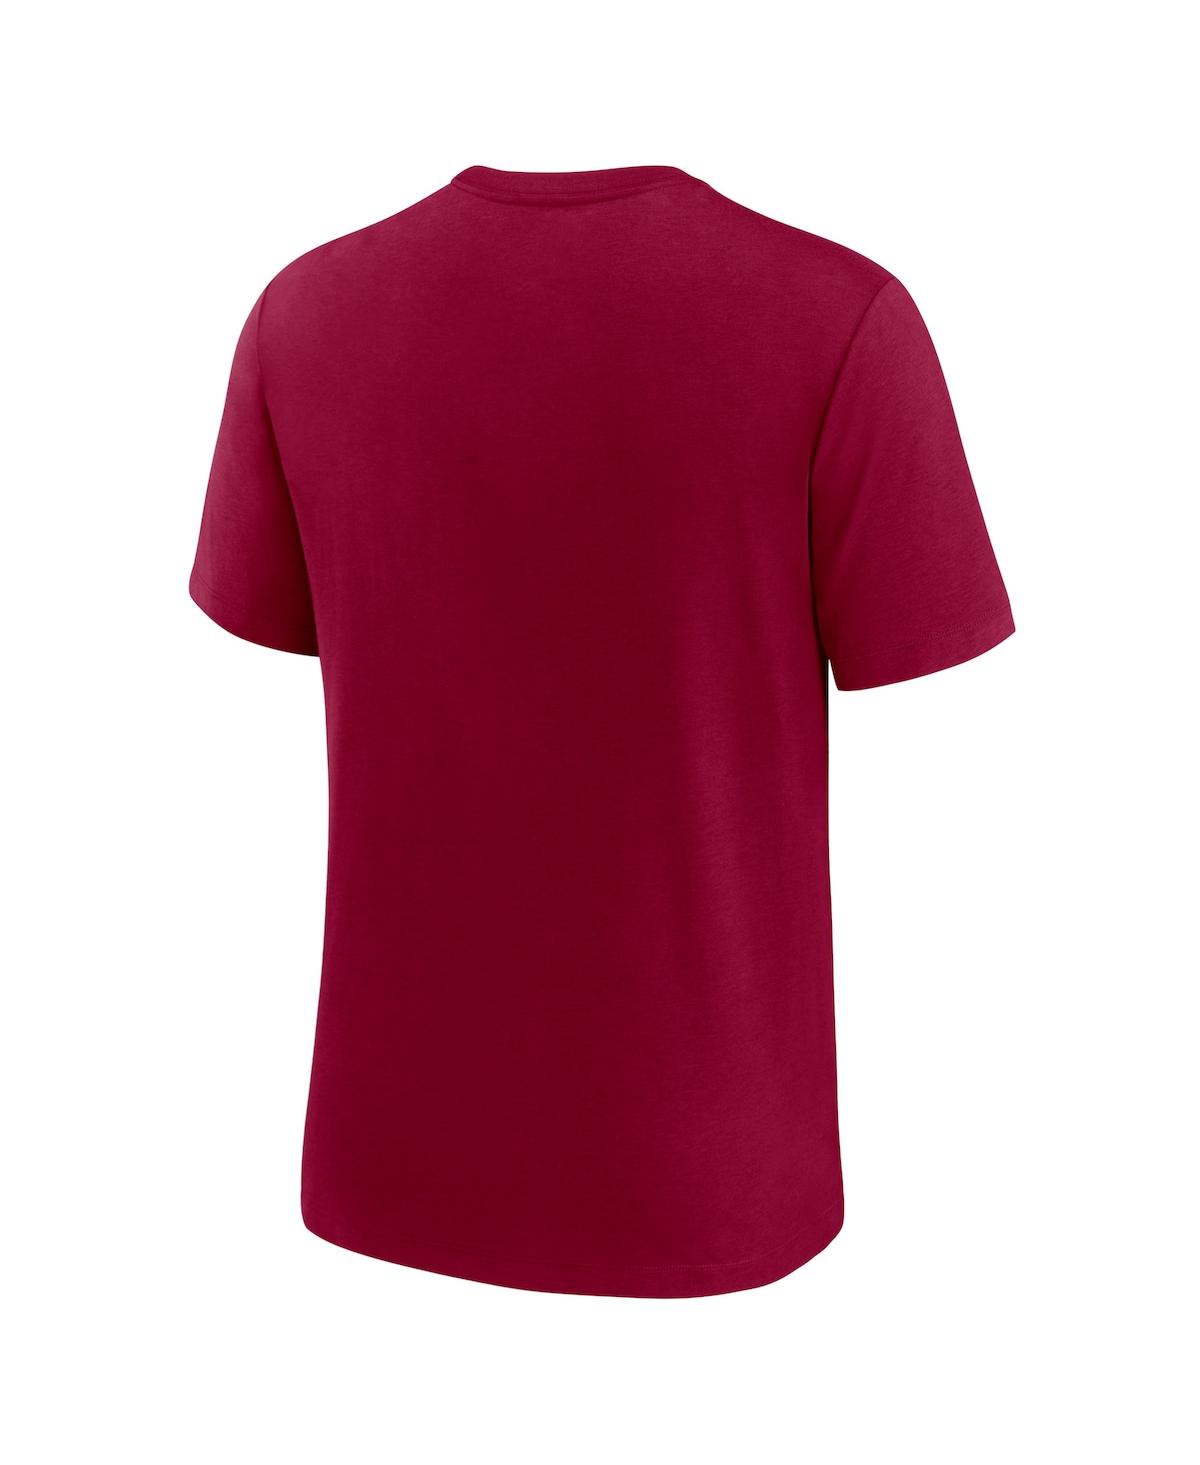 Shop Nike Men's  Burgundy Washington Commanders Rewind Logo Tri-blend T-shirt